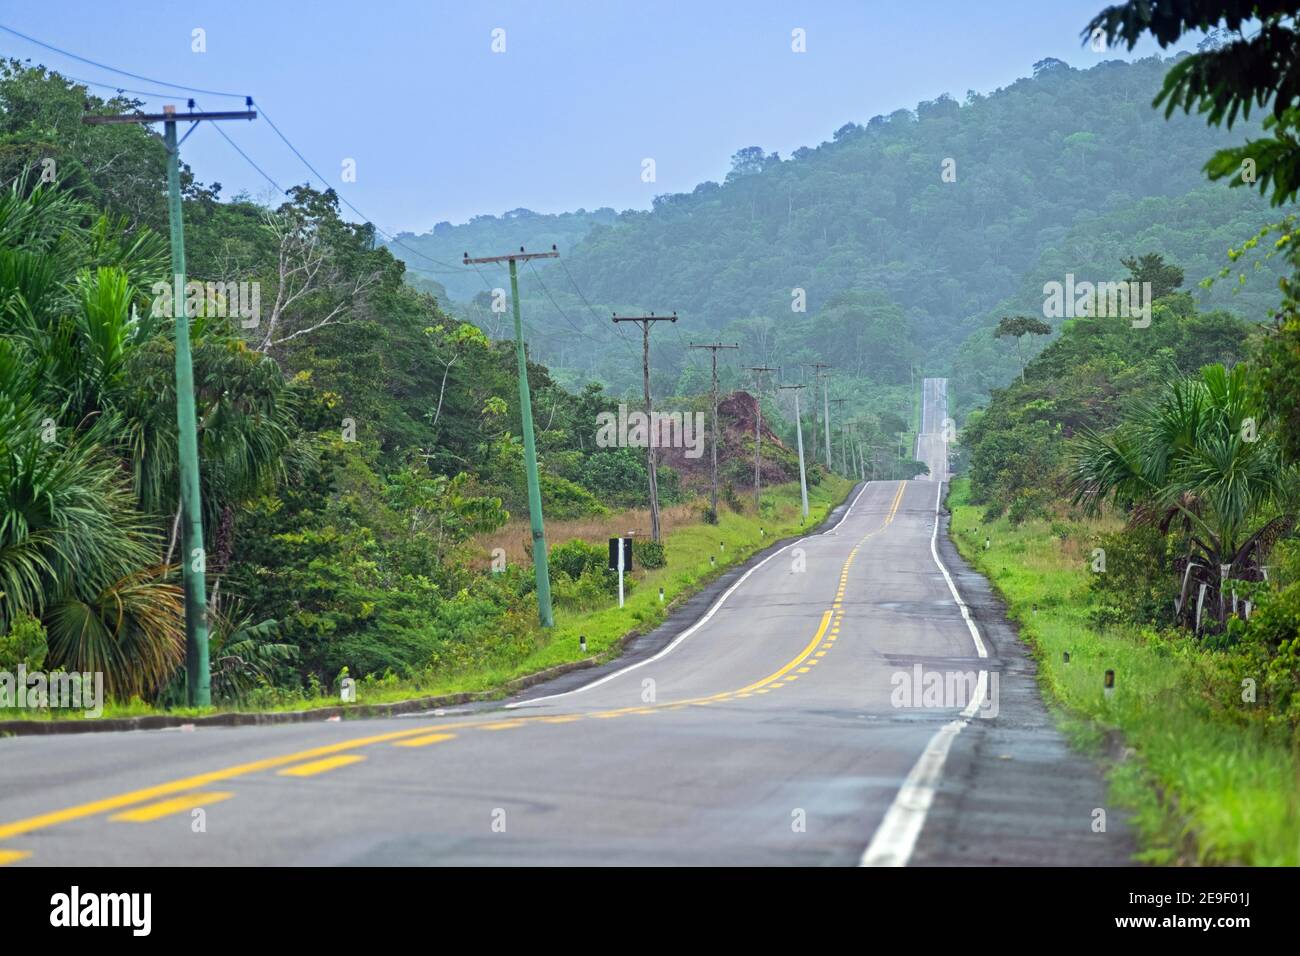 Route 174 / BR-174, Bundesstraße über Amazonas Regenwald / Regenwald / Dschungel im brasilianischen Bundesstaat Amazonas, Brasilien Stockfoto